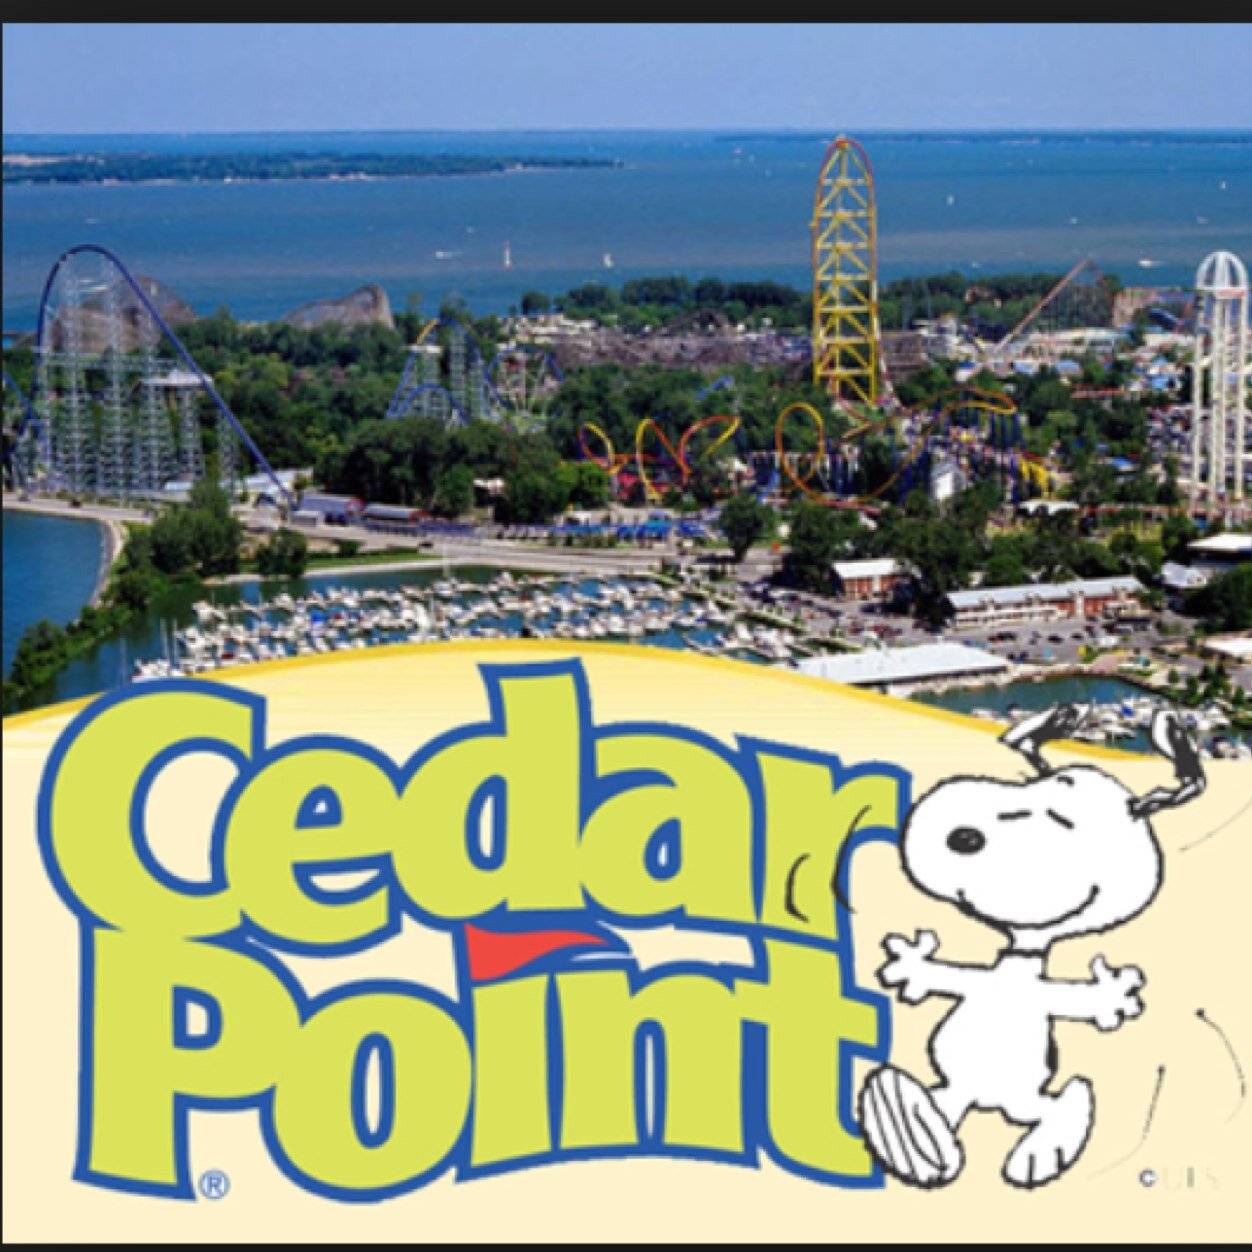 Not your average Cedar Point fan!!! NEW FOR 2018! Steel Vengeance, a Hybrid coaster! *Not affiliated with Cedar Point or Cedar Fair*